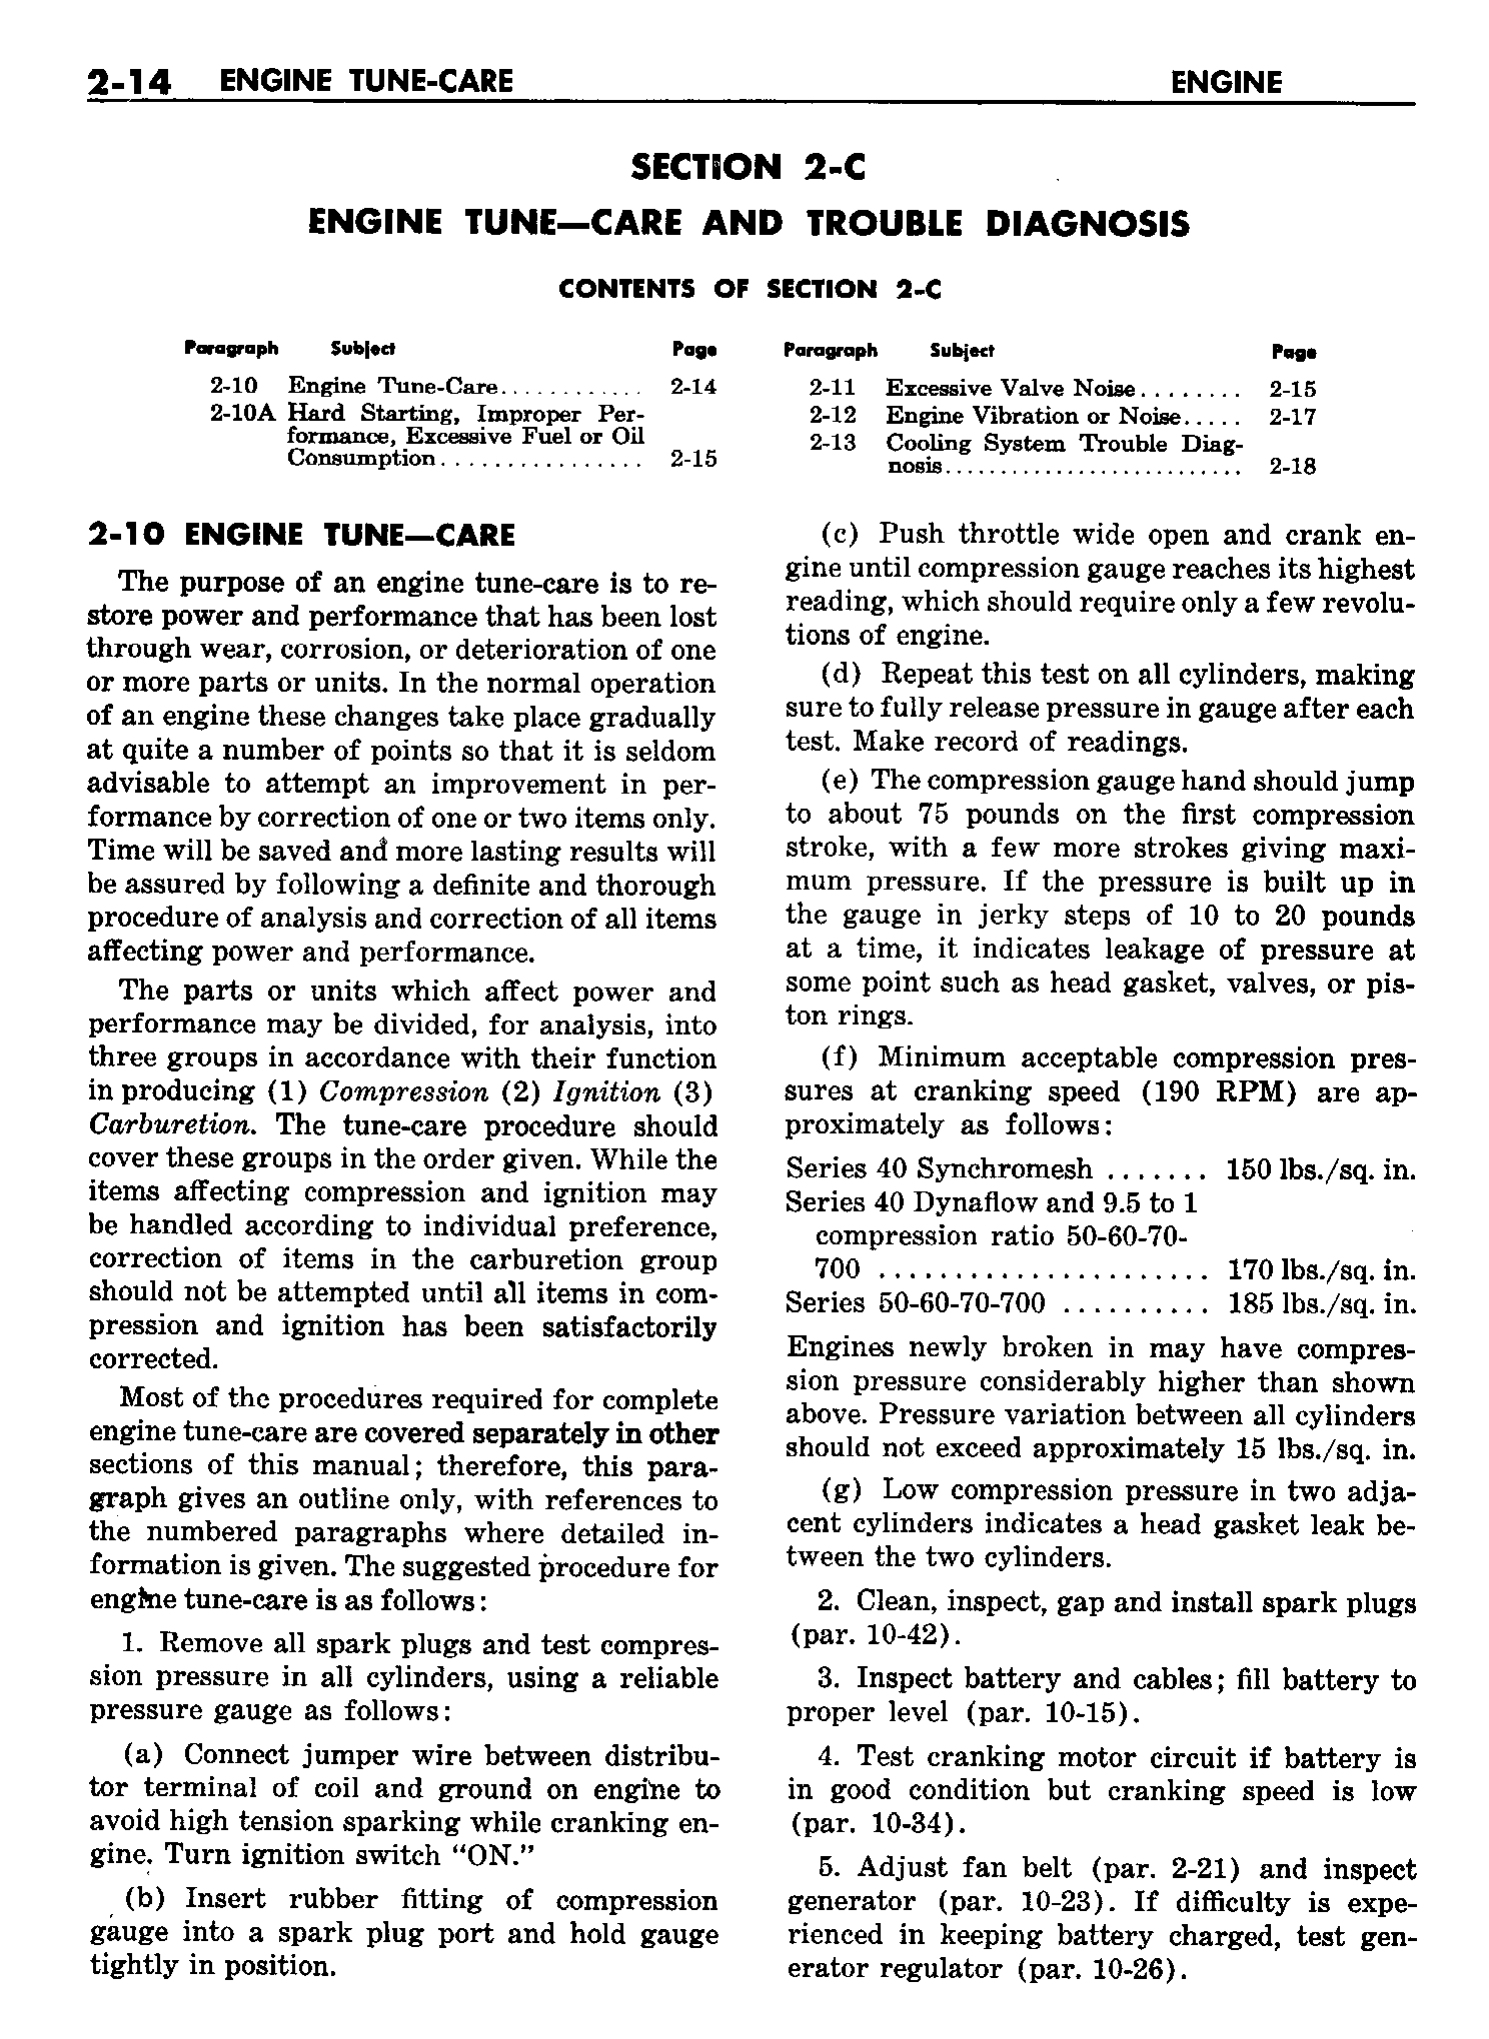 n_03 1958 Buick Shop Manual - Engine_14.jpg